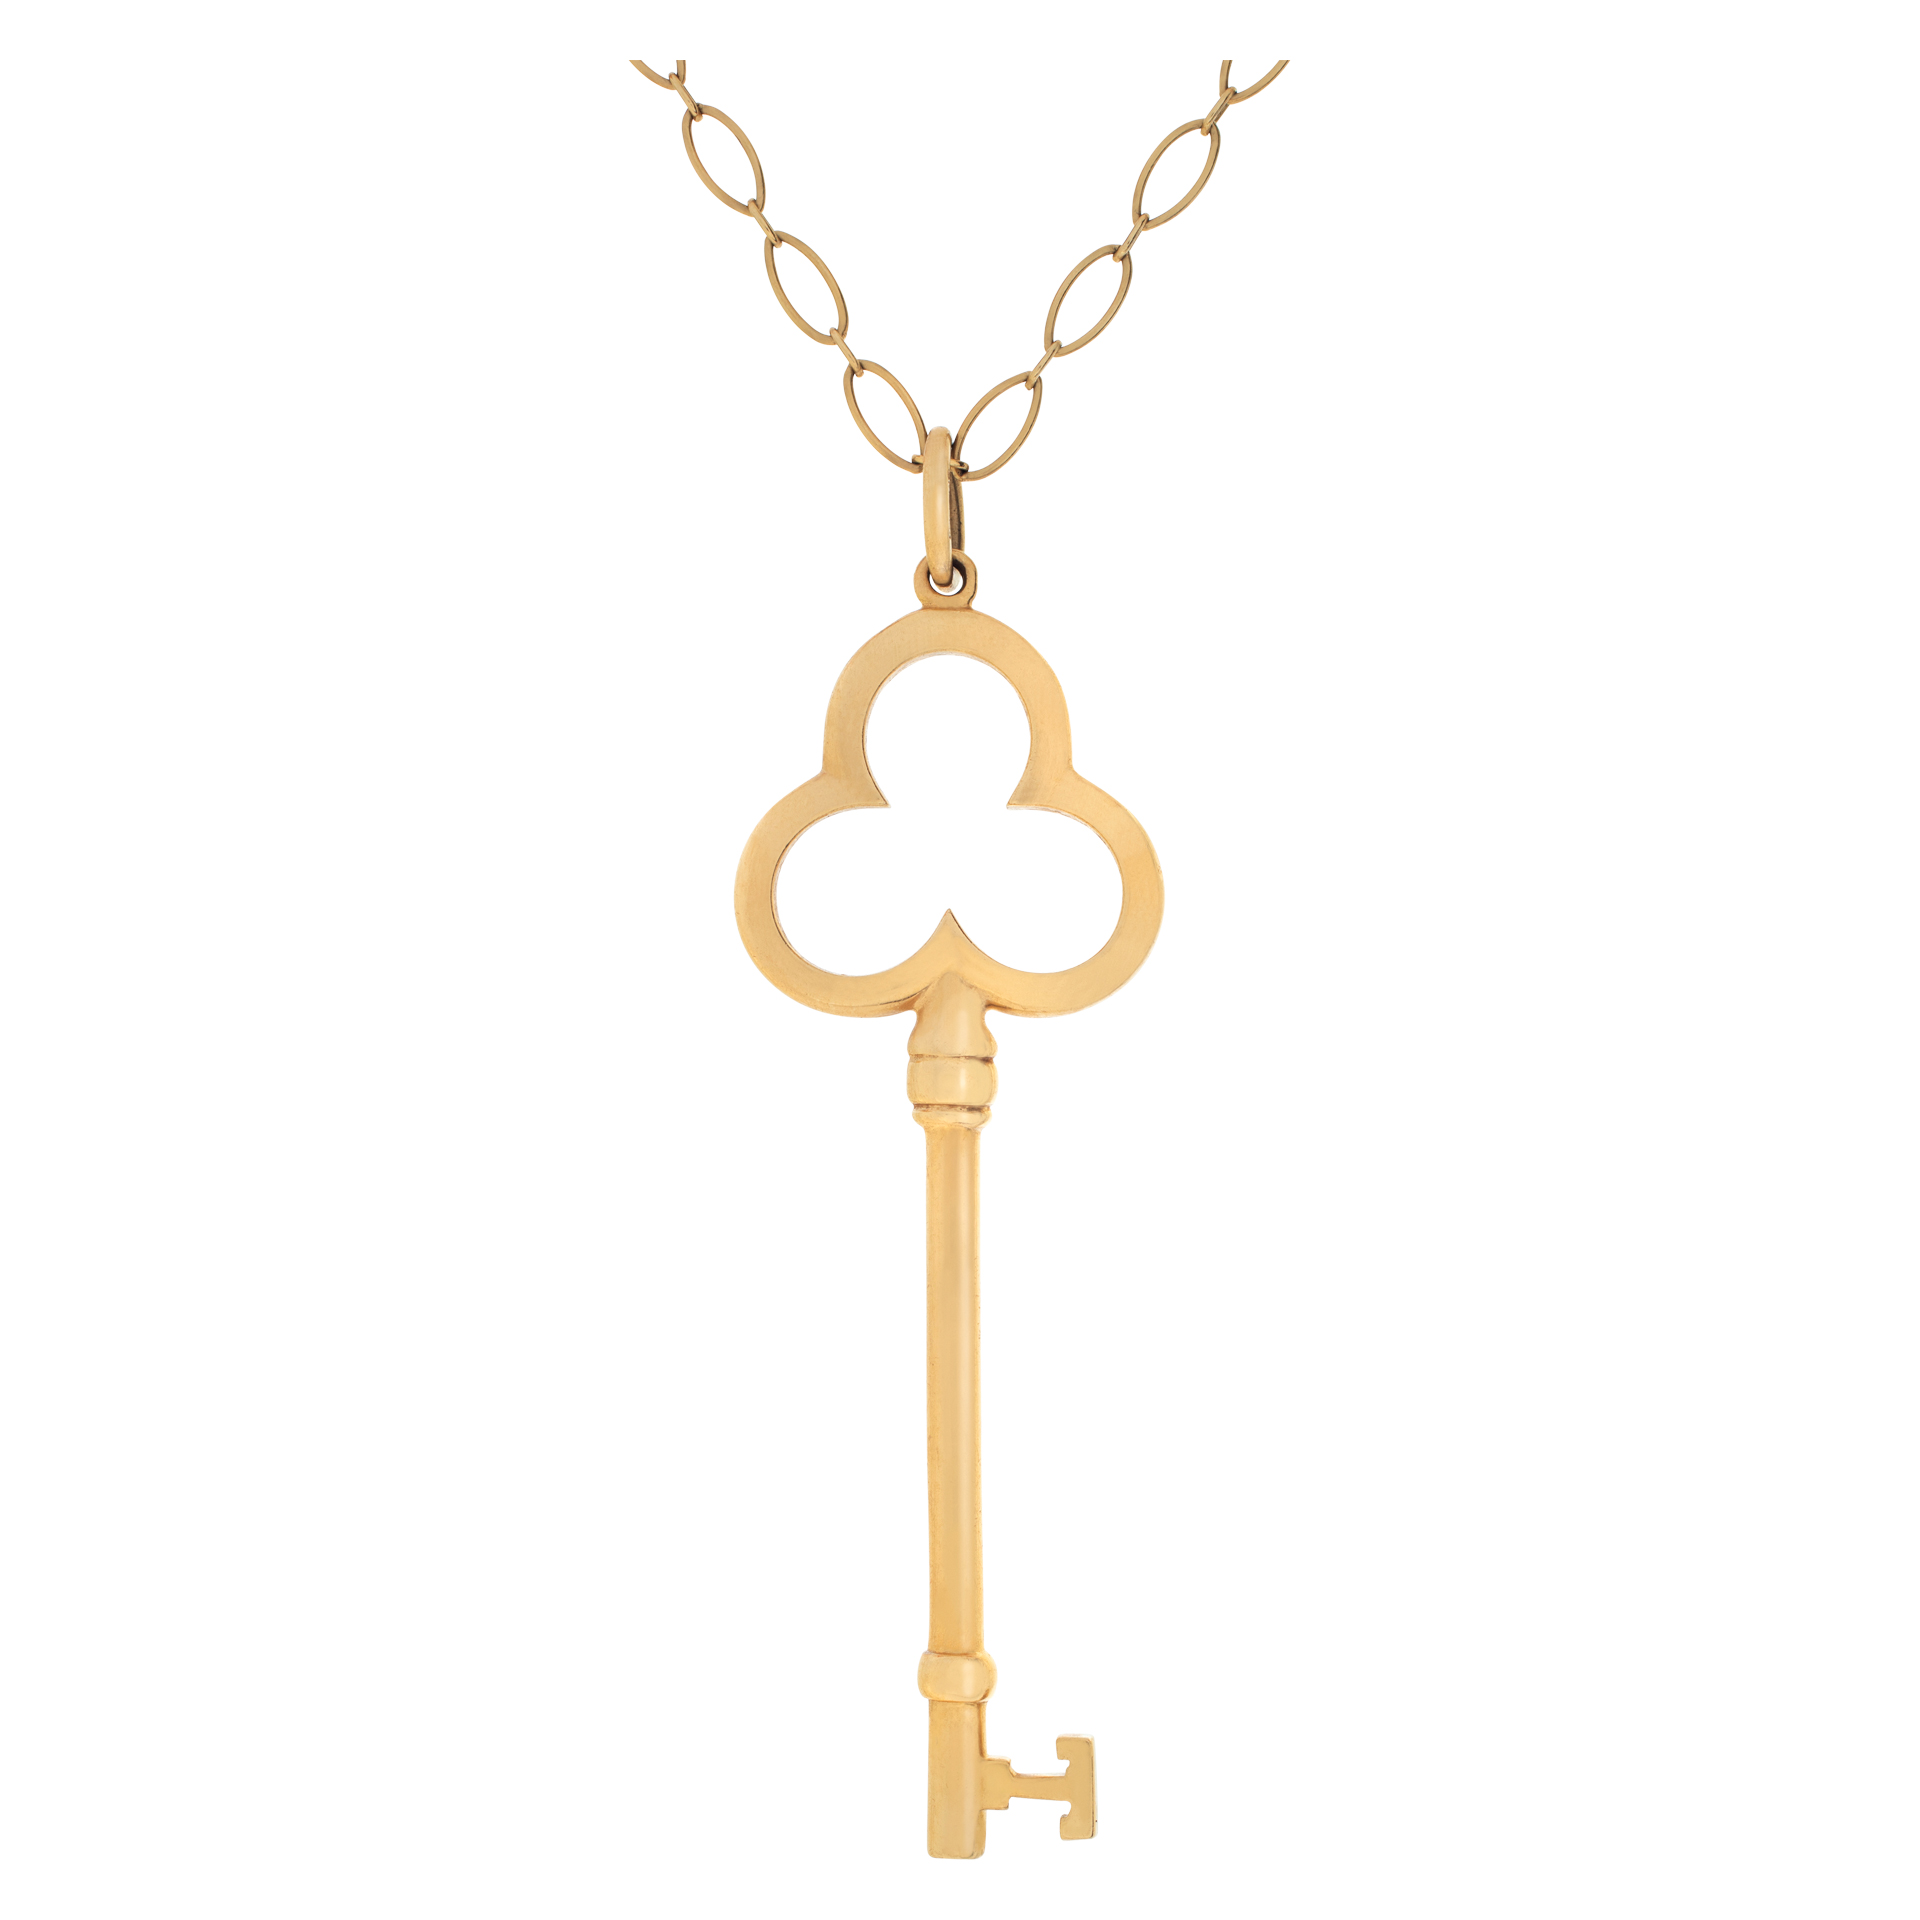 Tiffany & Co. Open Trefoil key pendant and chain in 18k yellow goldTiffany & Co. Open Trefoil key pendant and chain in 18k yellow gold image 1